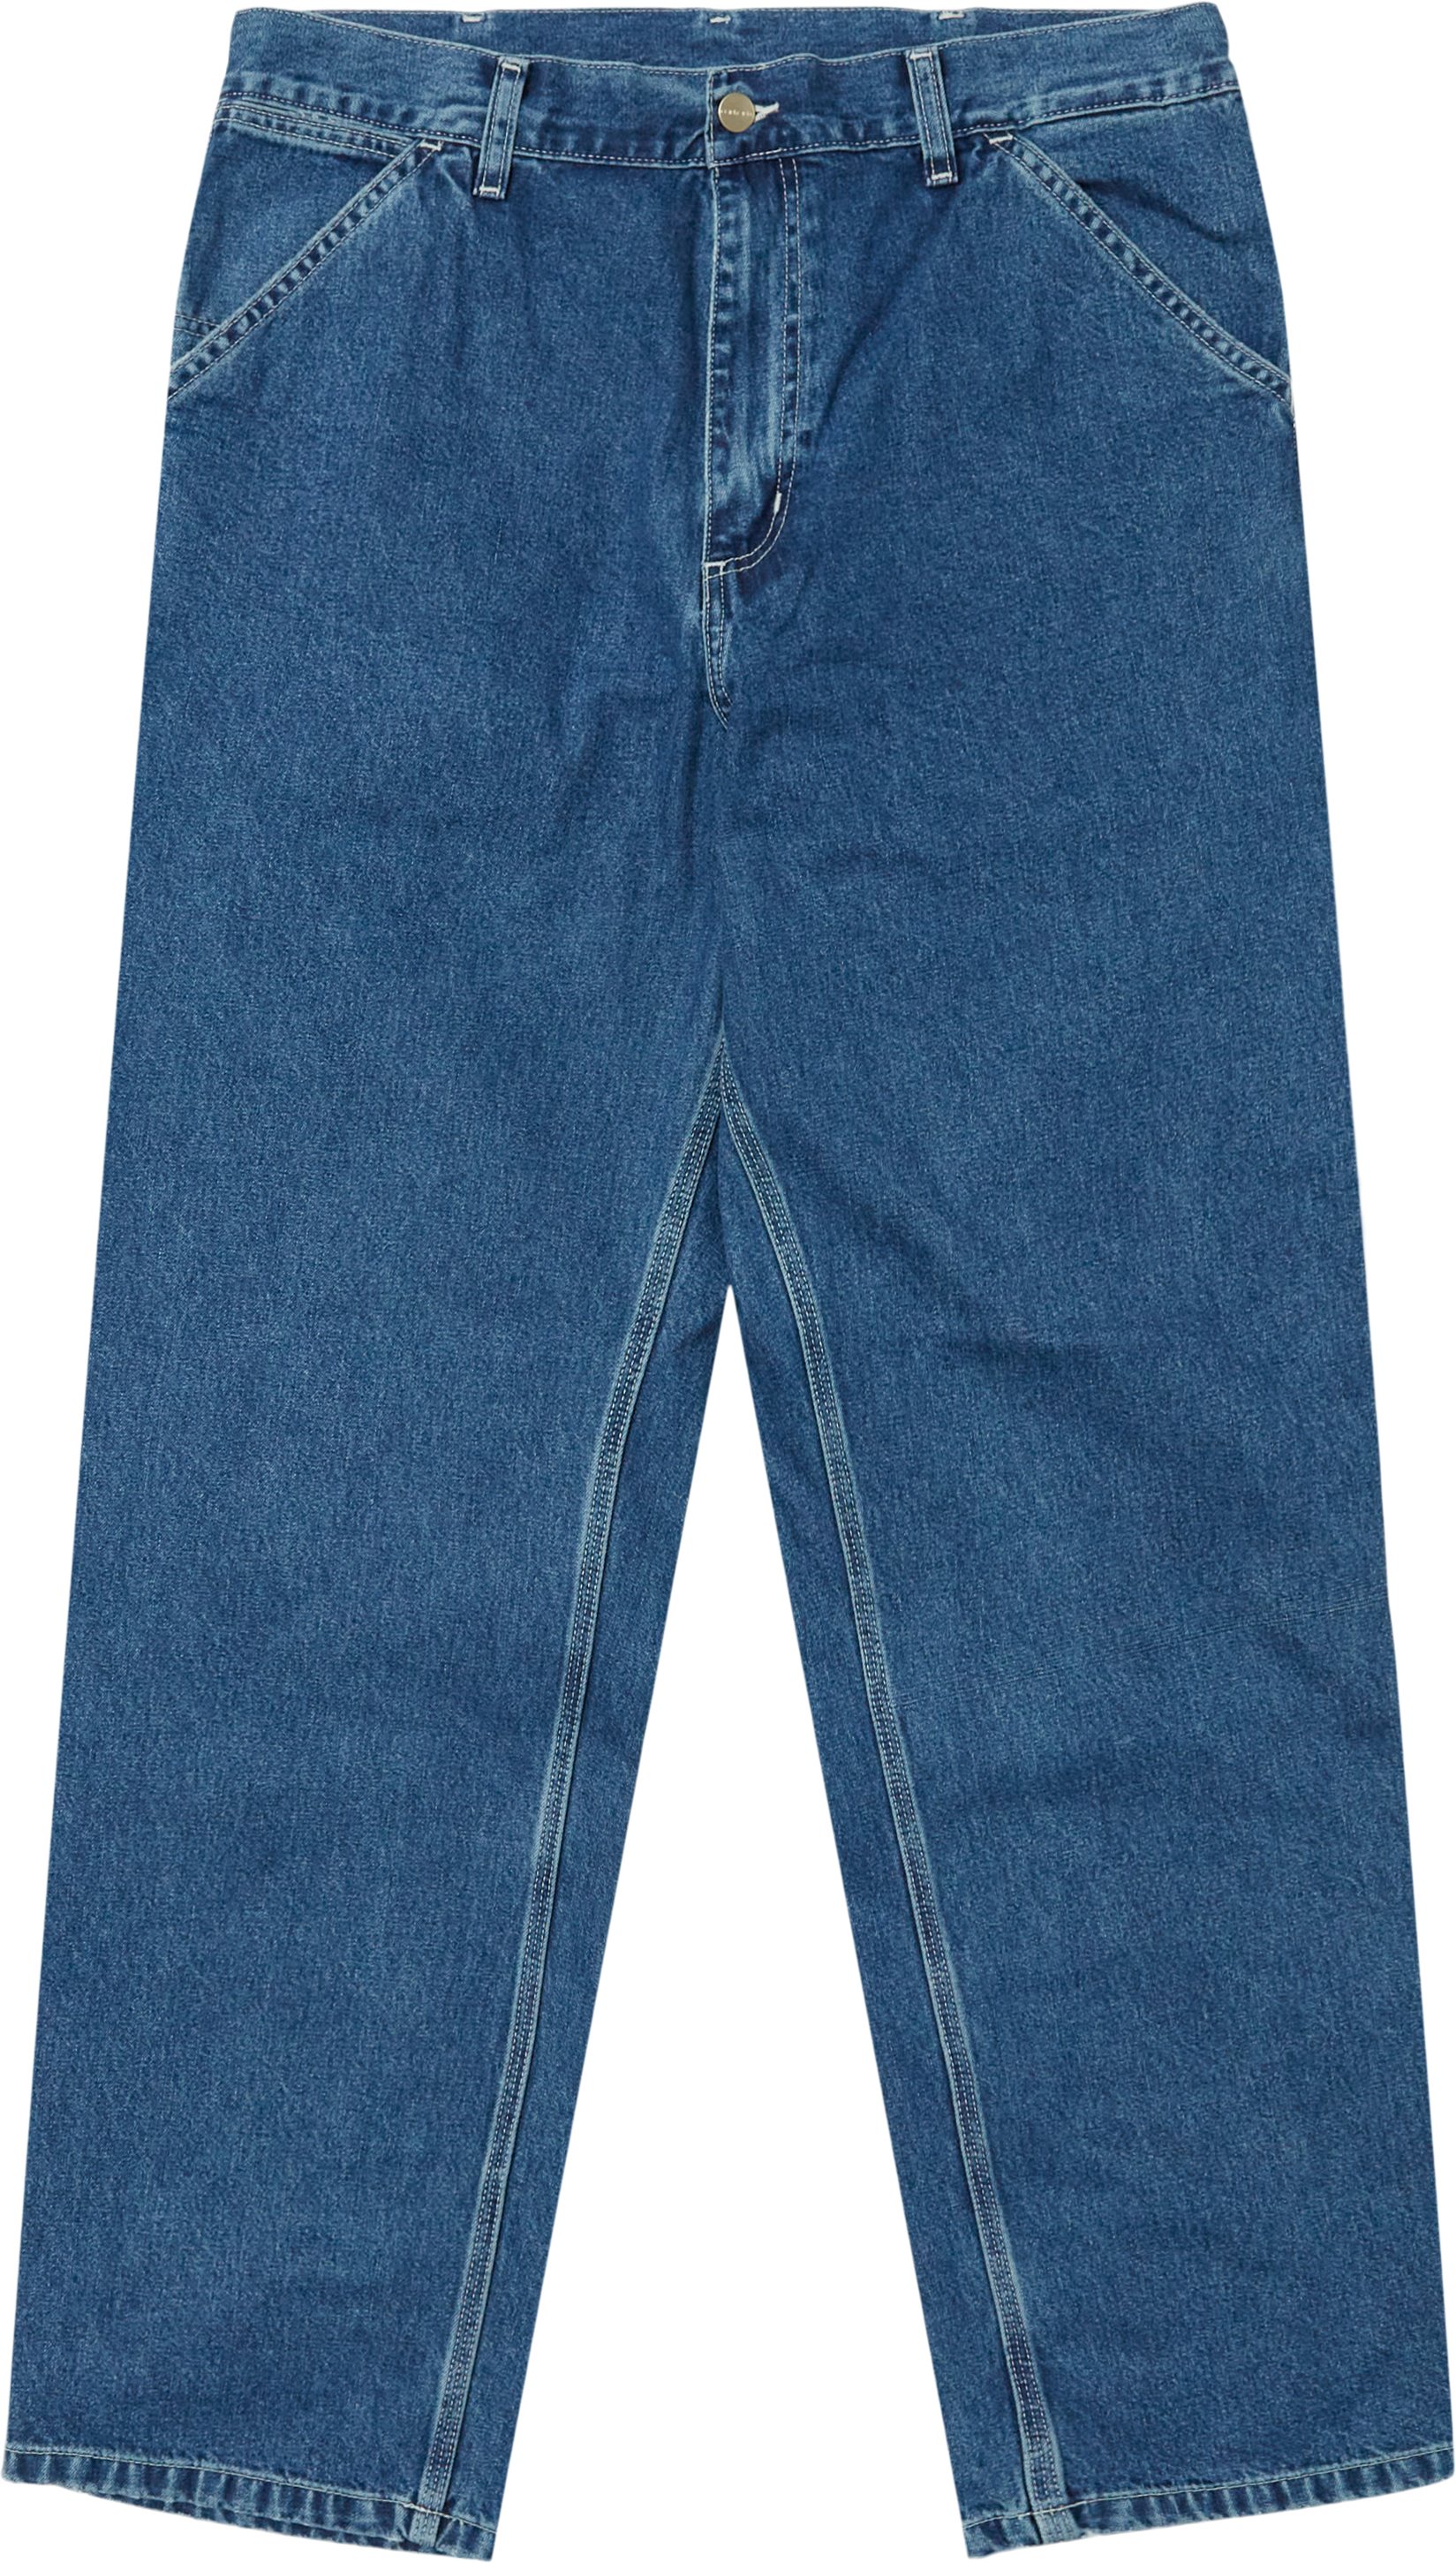 Simple Pant I022947 - Jeans - Regular fit - Denim